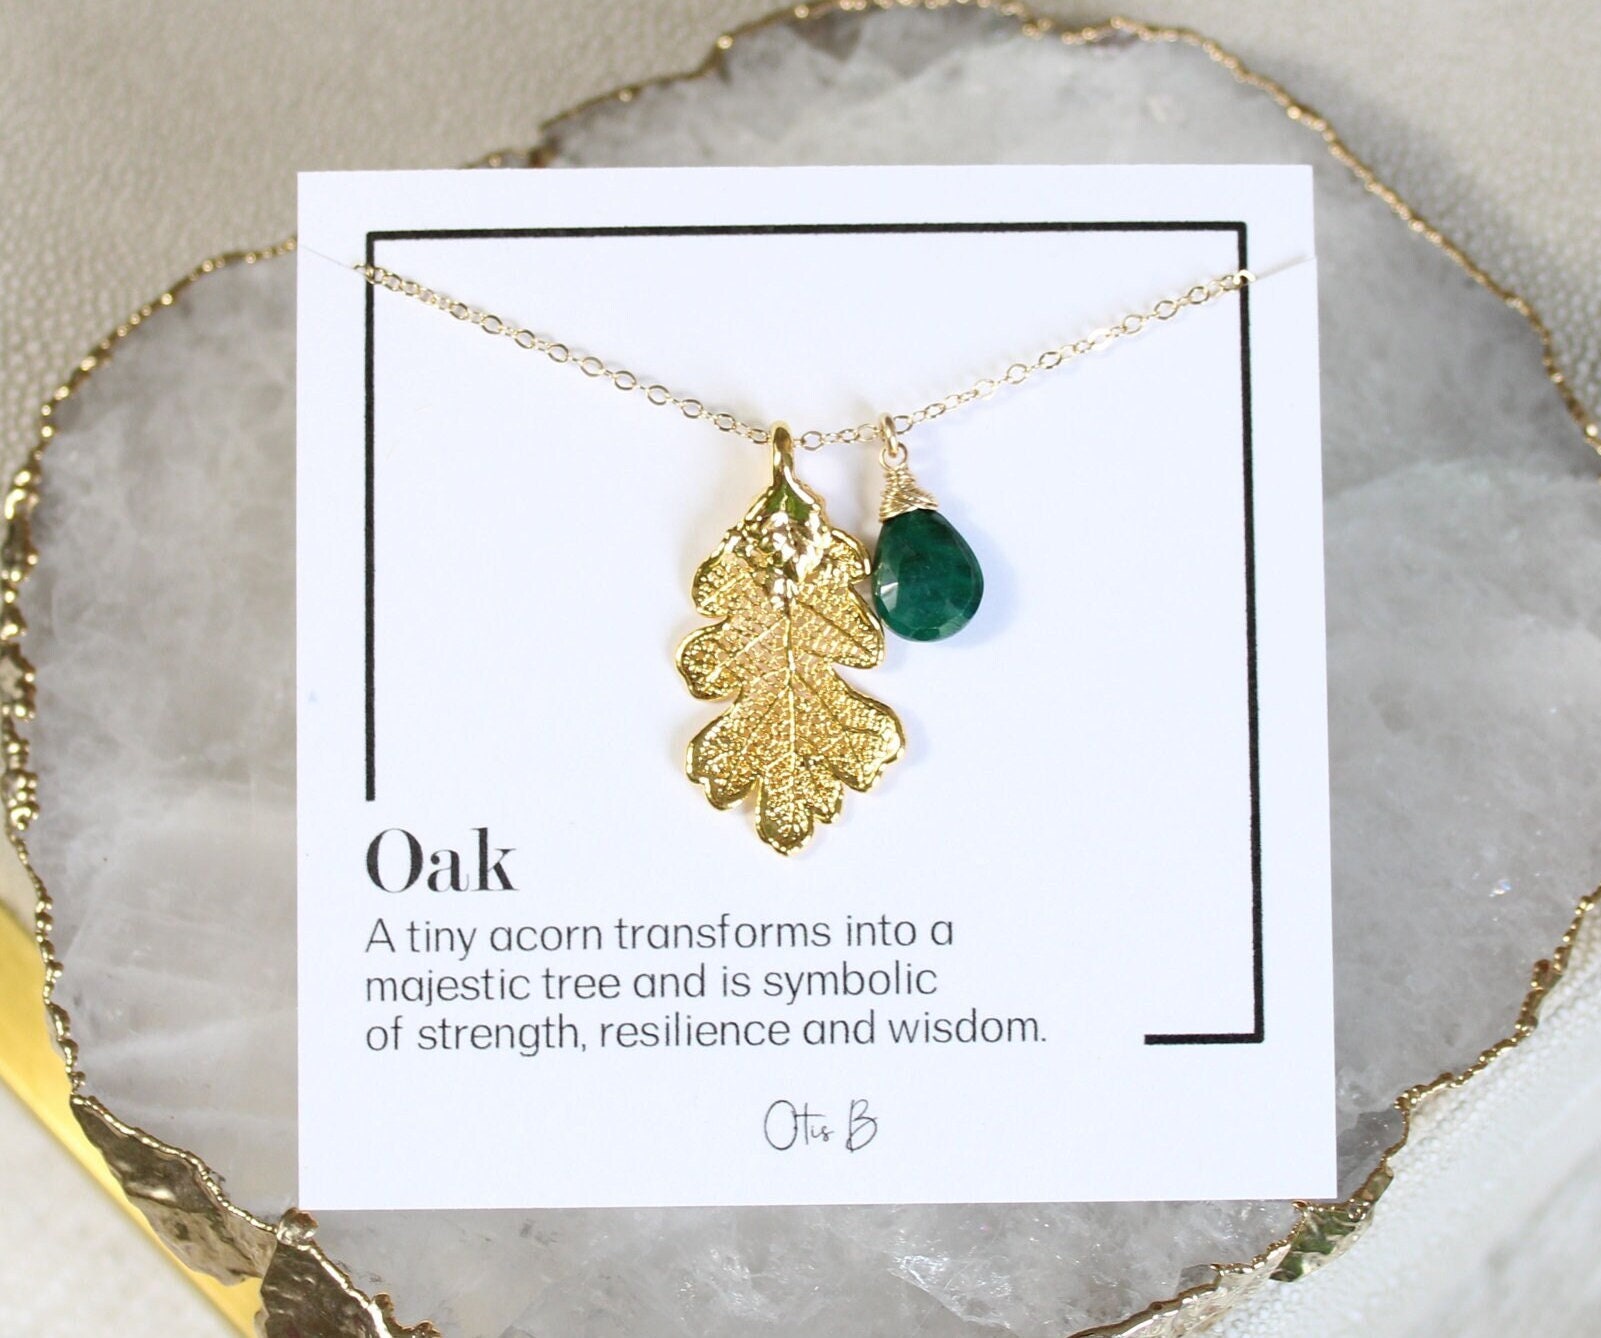 Kiola Designs Silver Toned Oak Tree Leaf Pendant Necklace | Amazon.com